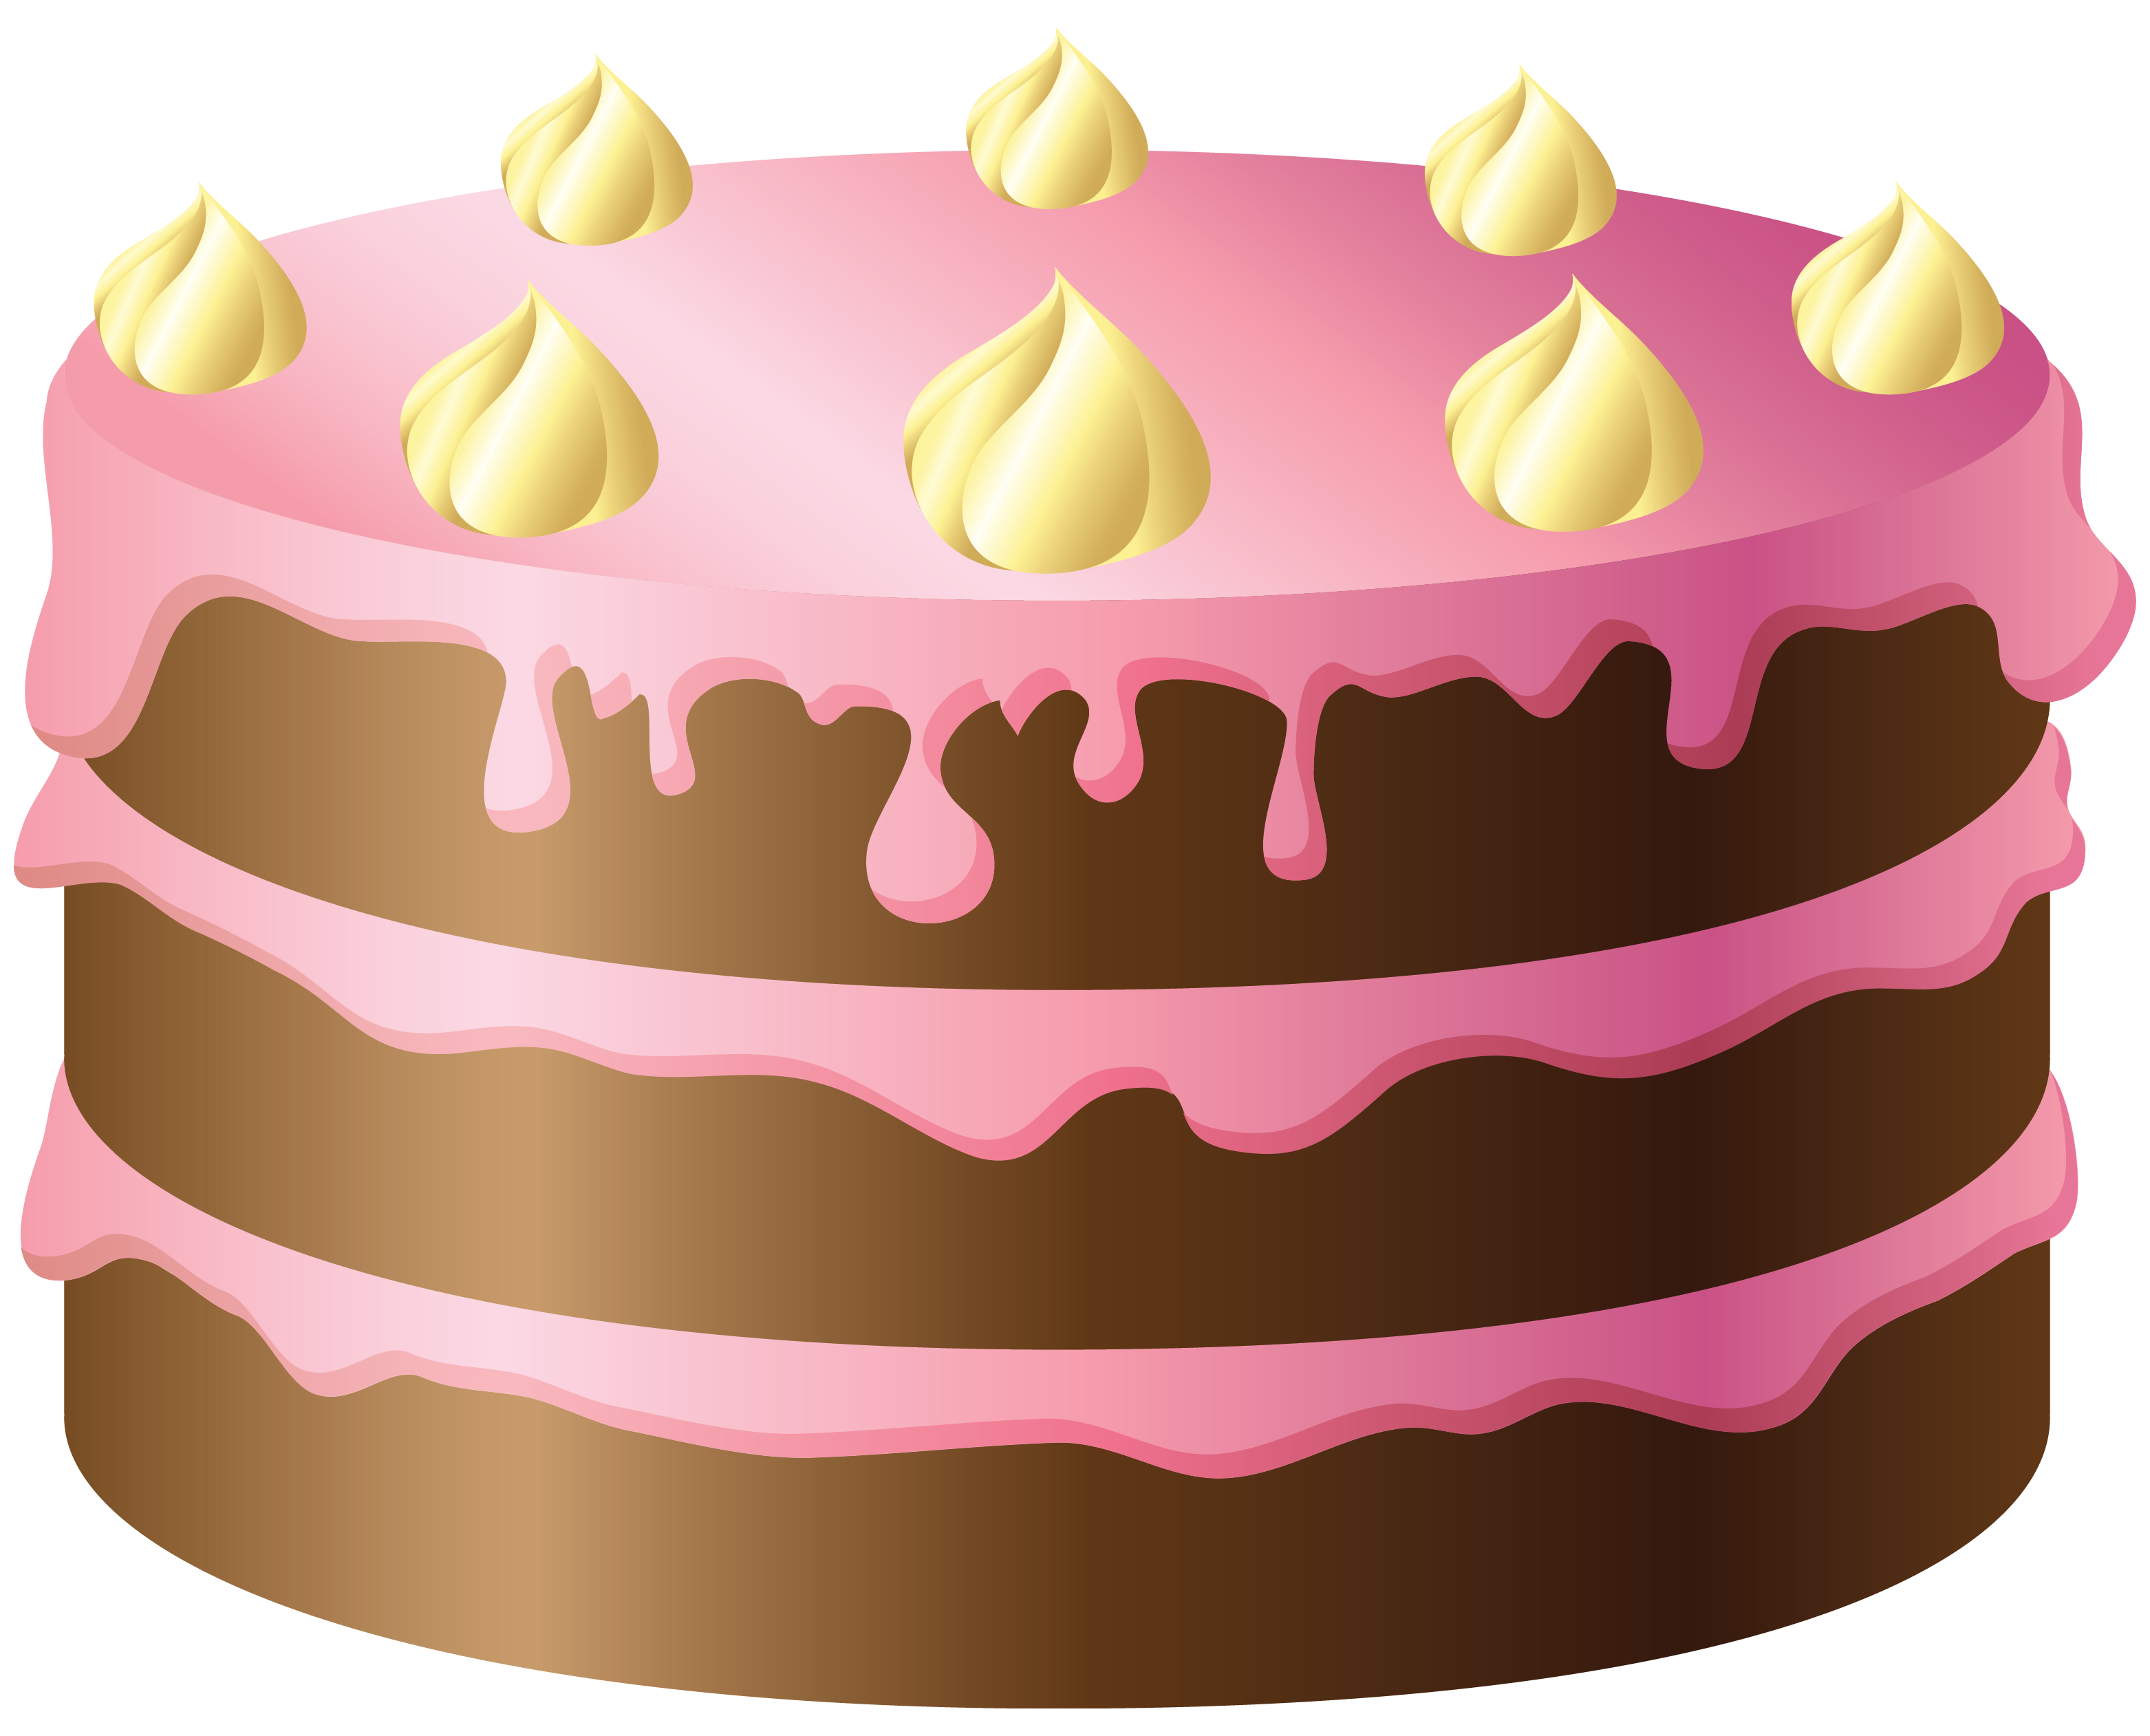 1st birthday cake clipart fre - Cake Clip Art Free